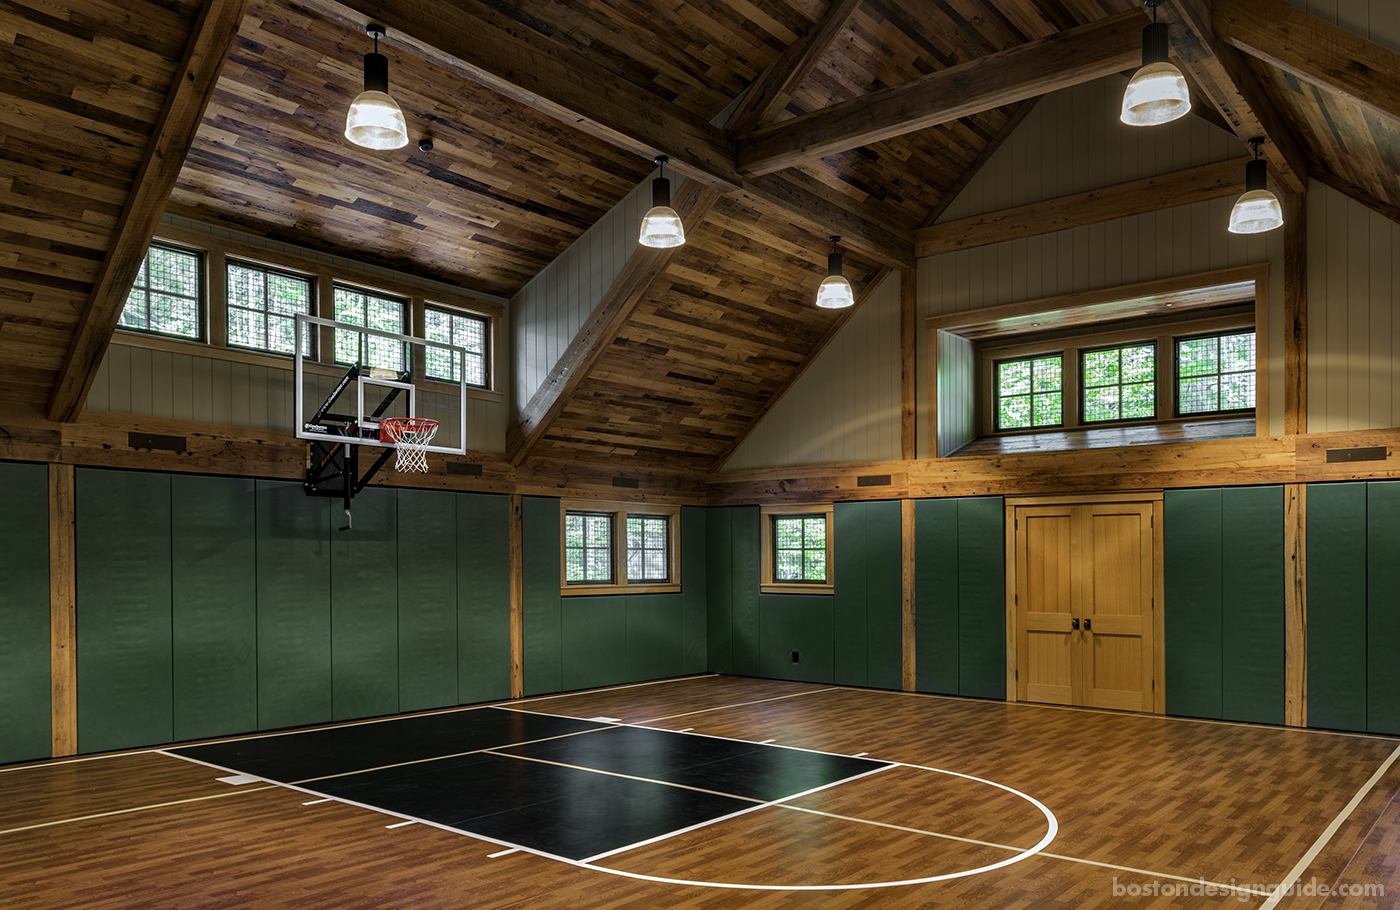 Home Court Advantage: Indoor Hoops Boston Design Guide